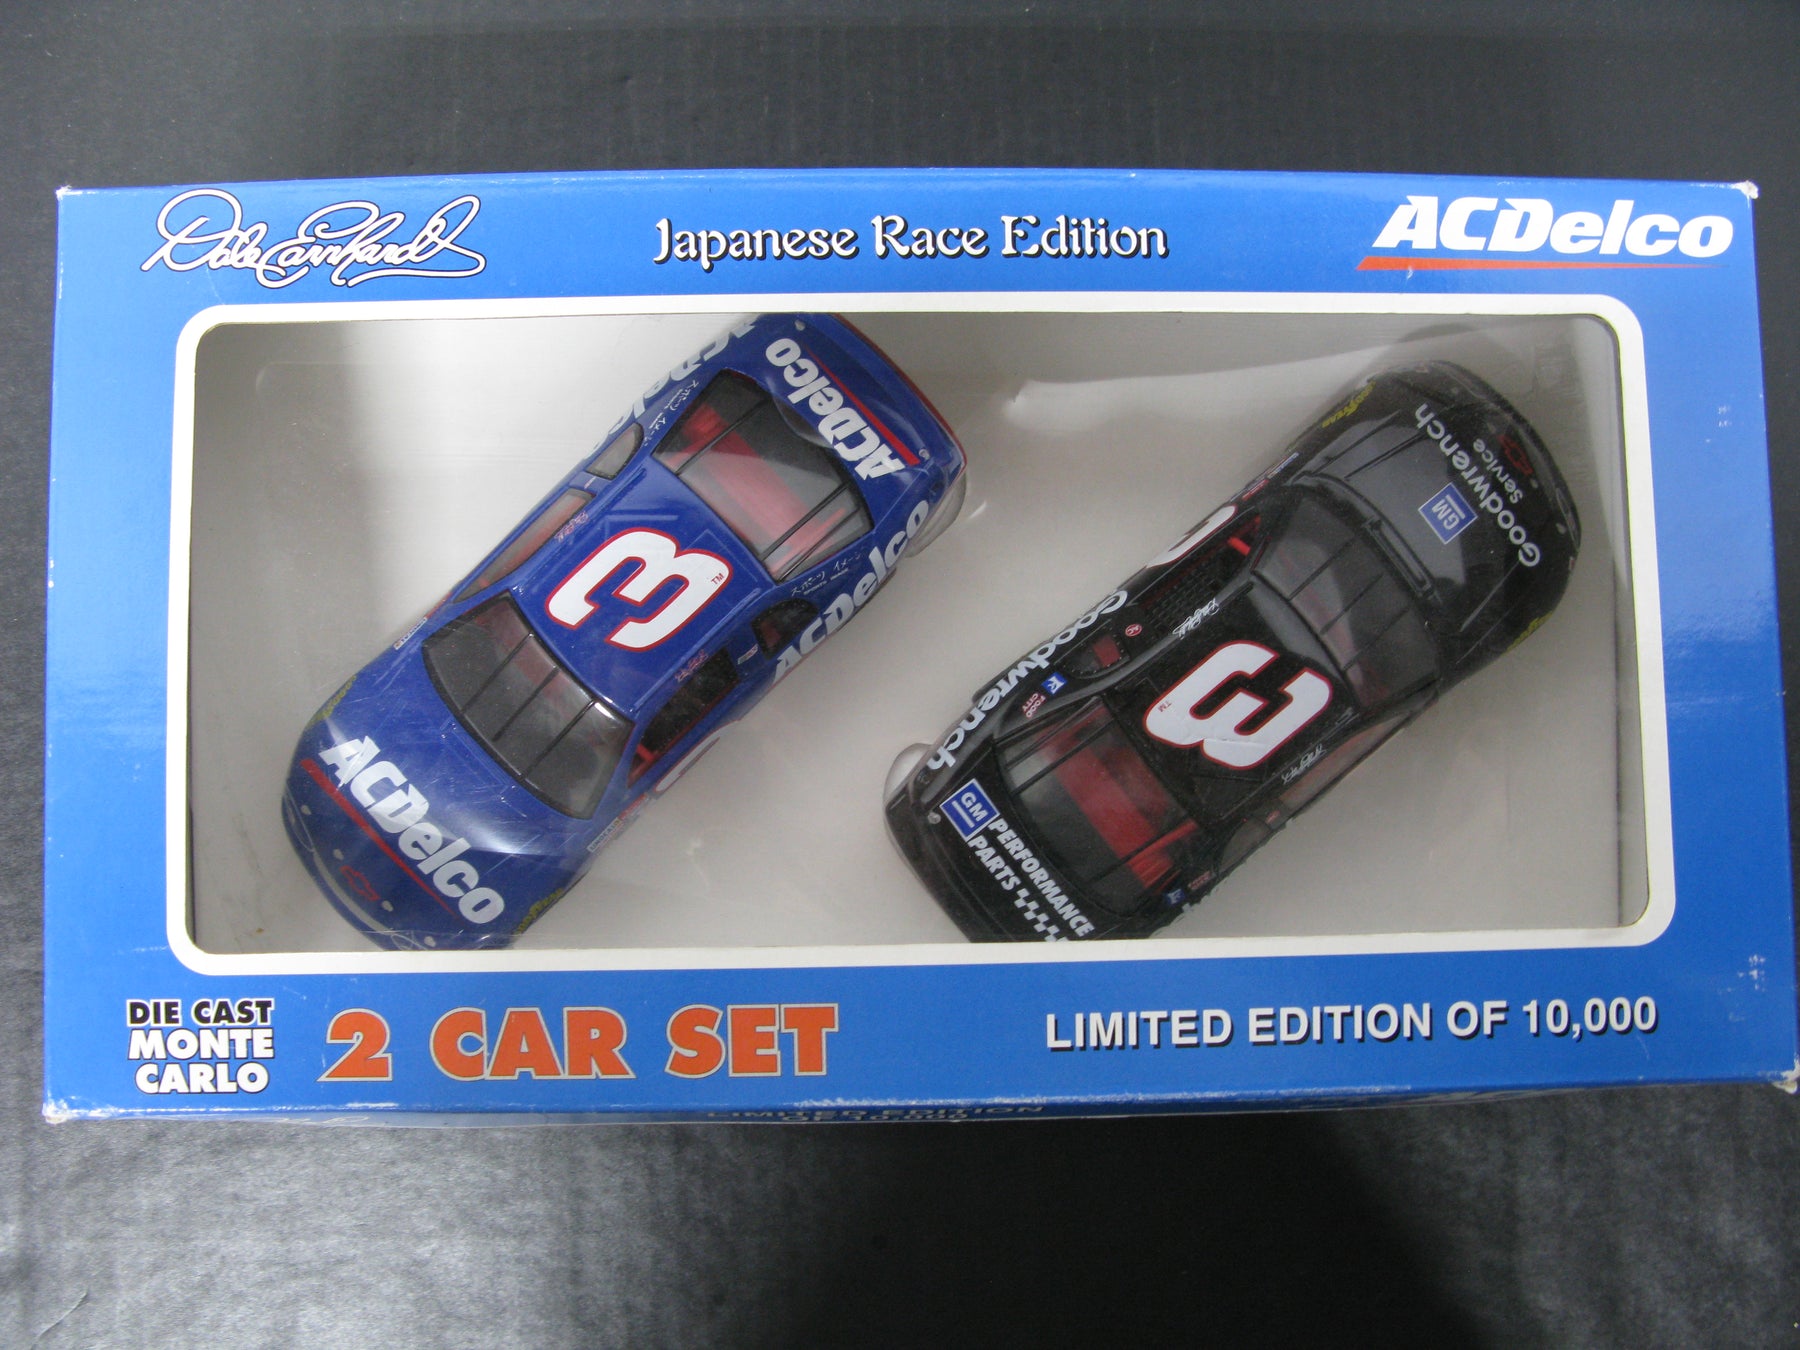 Dale Earnhardt 2 Car Set Japanese Race Edition